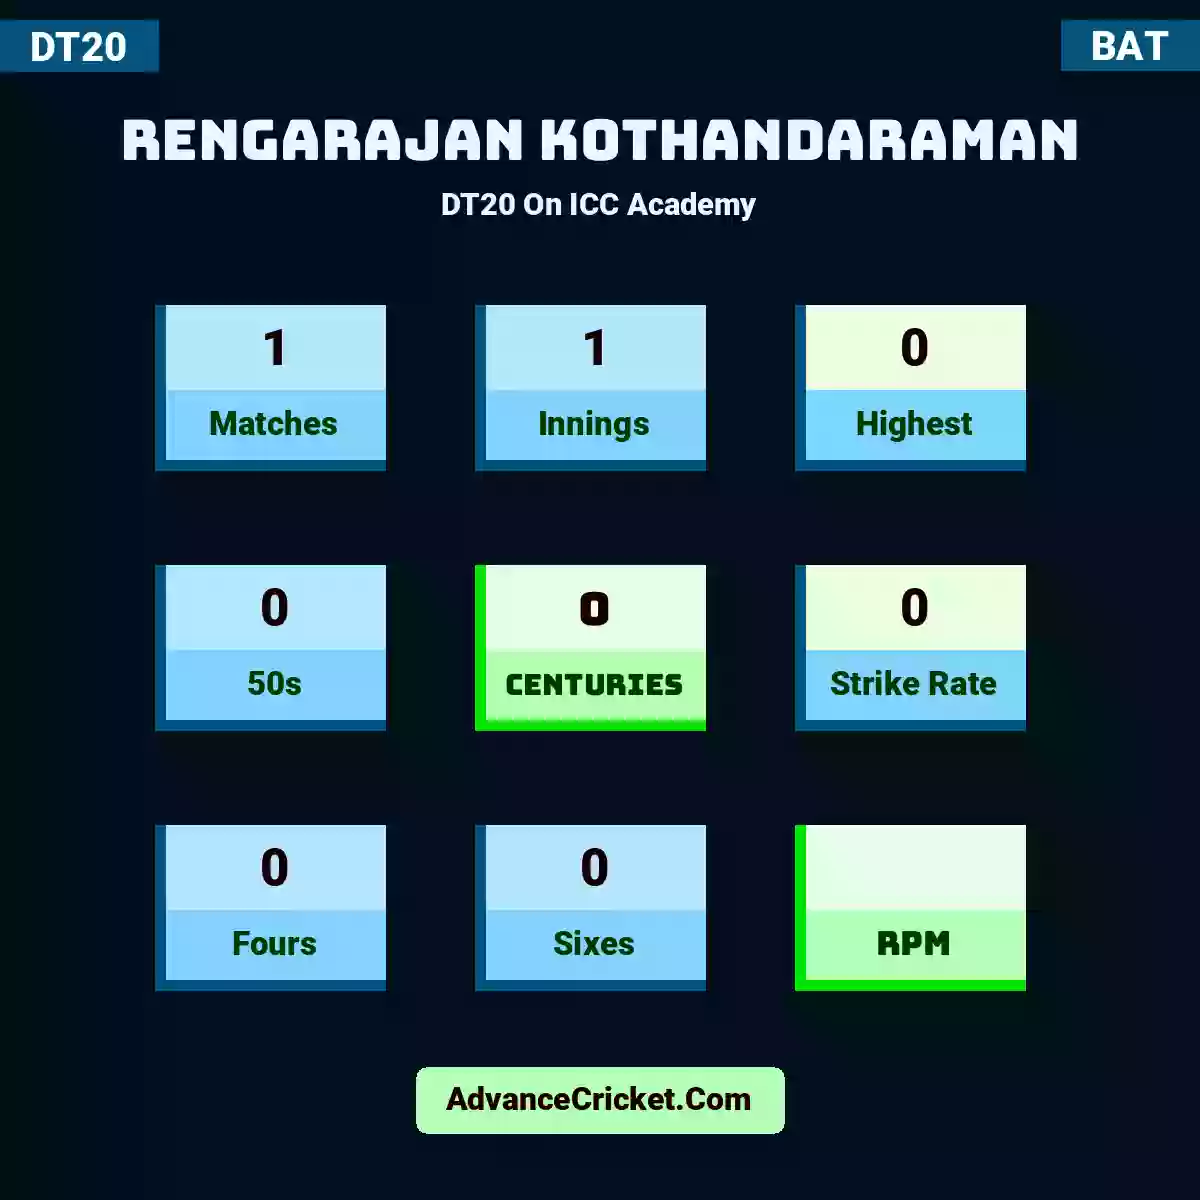 Rengarajan Kothandaraman DT20  On ICC Academy, Rengarajan Kothandaraman played 1 matches, scored 0 runs as highest, 0 half-centuries, and 0 centuries, with a strike rate of 0. R.Kothandaraman hit 0 fours and 0 sixes.